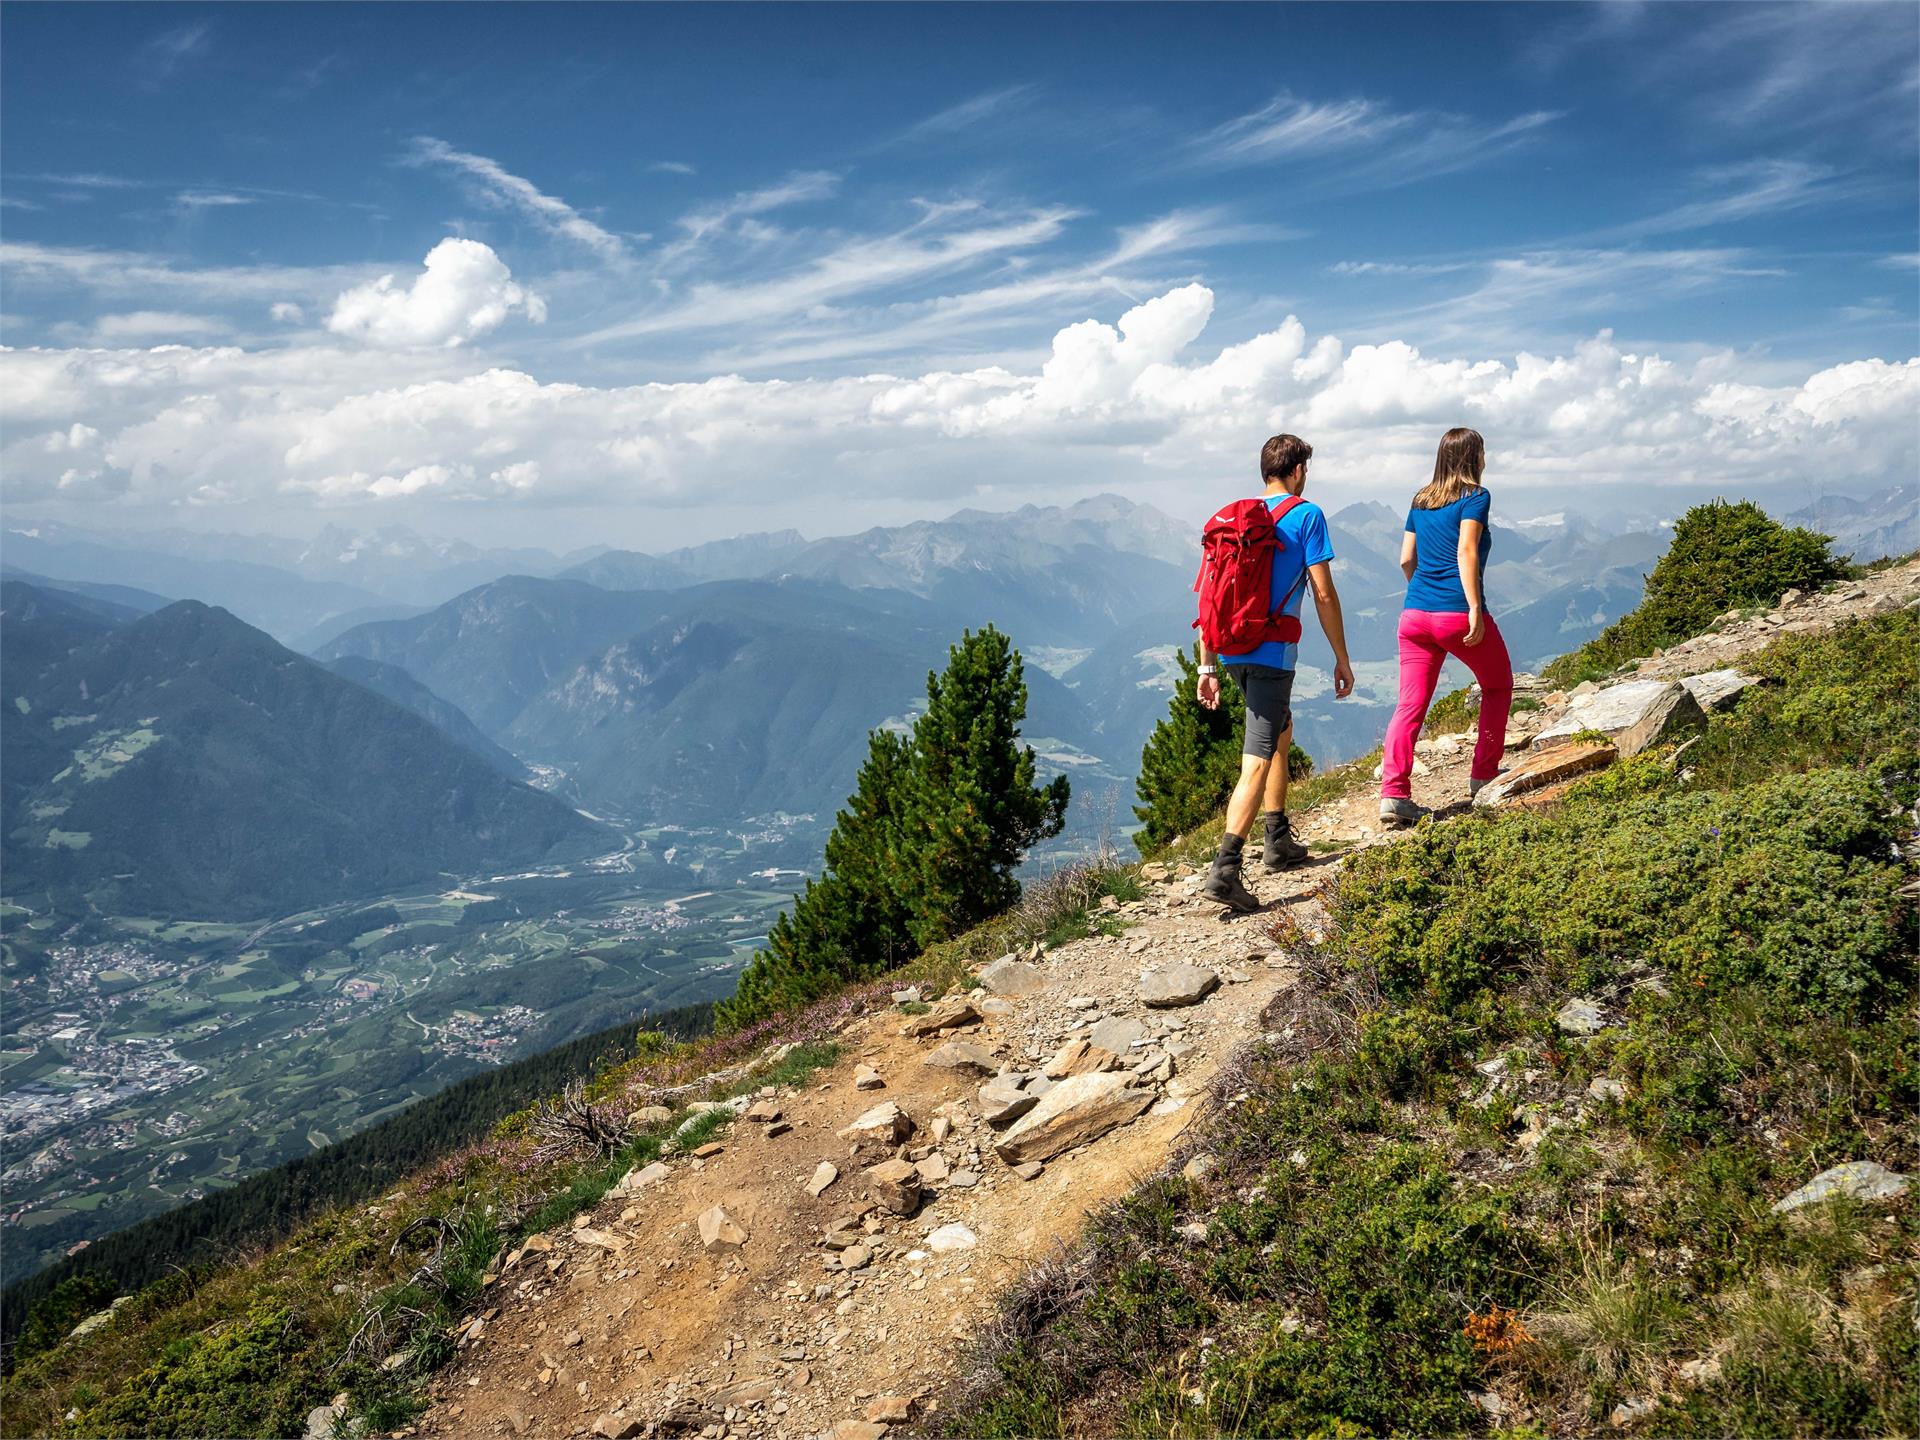 The Brixen High Mountain Trail on the Plose Mountain